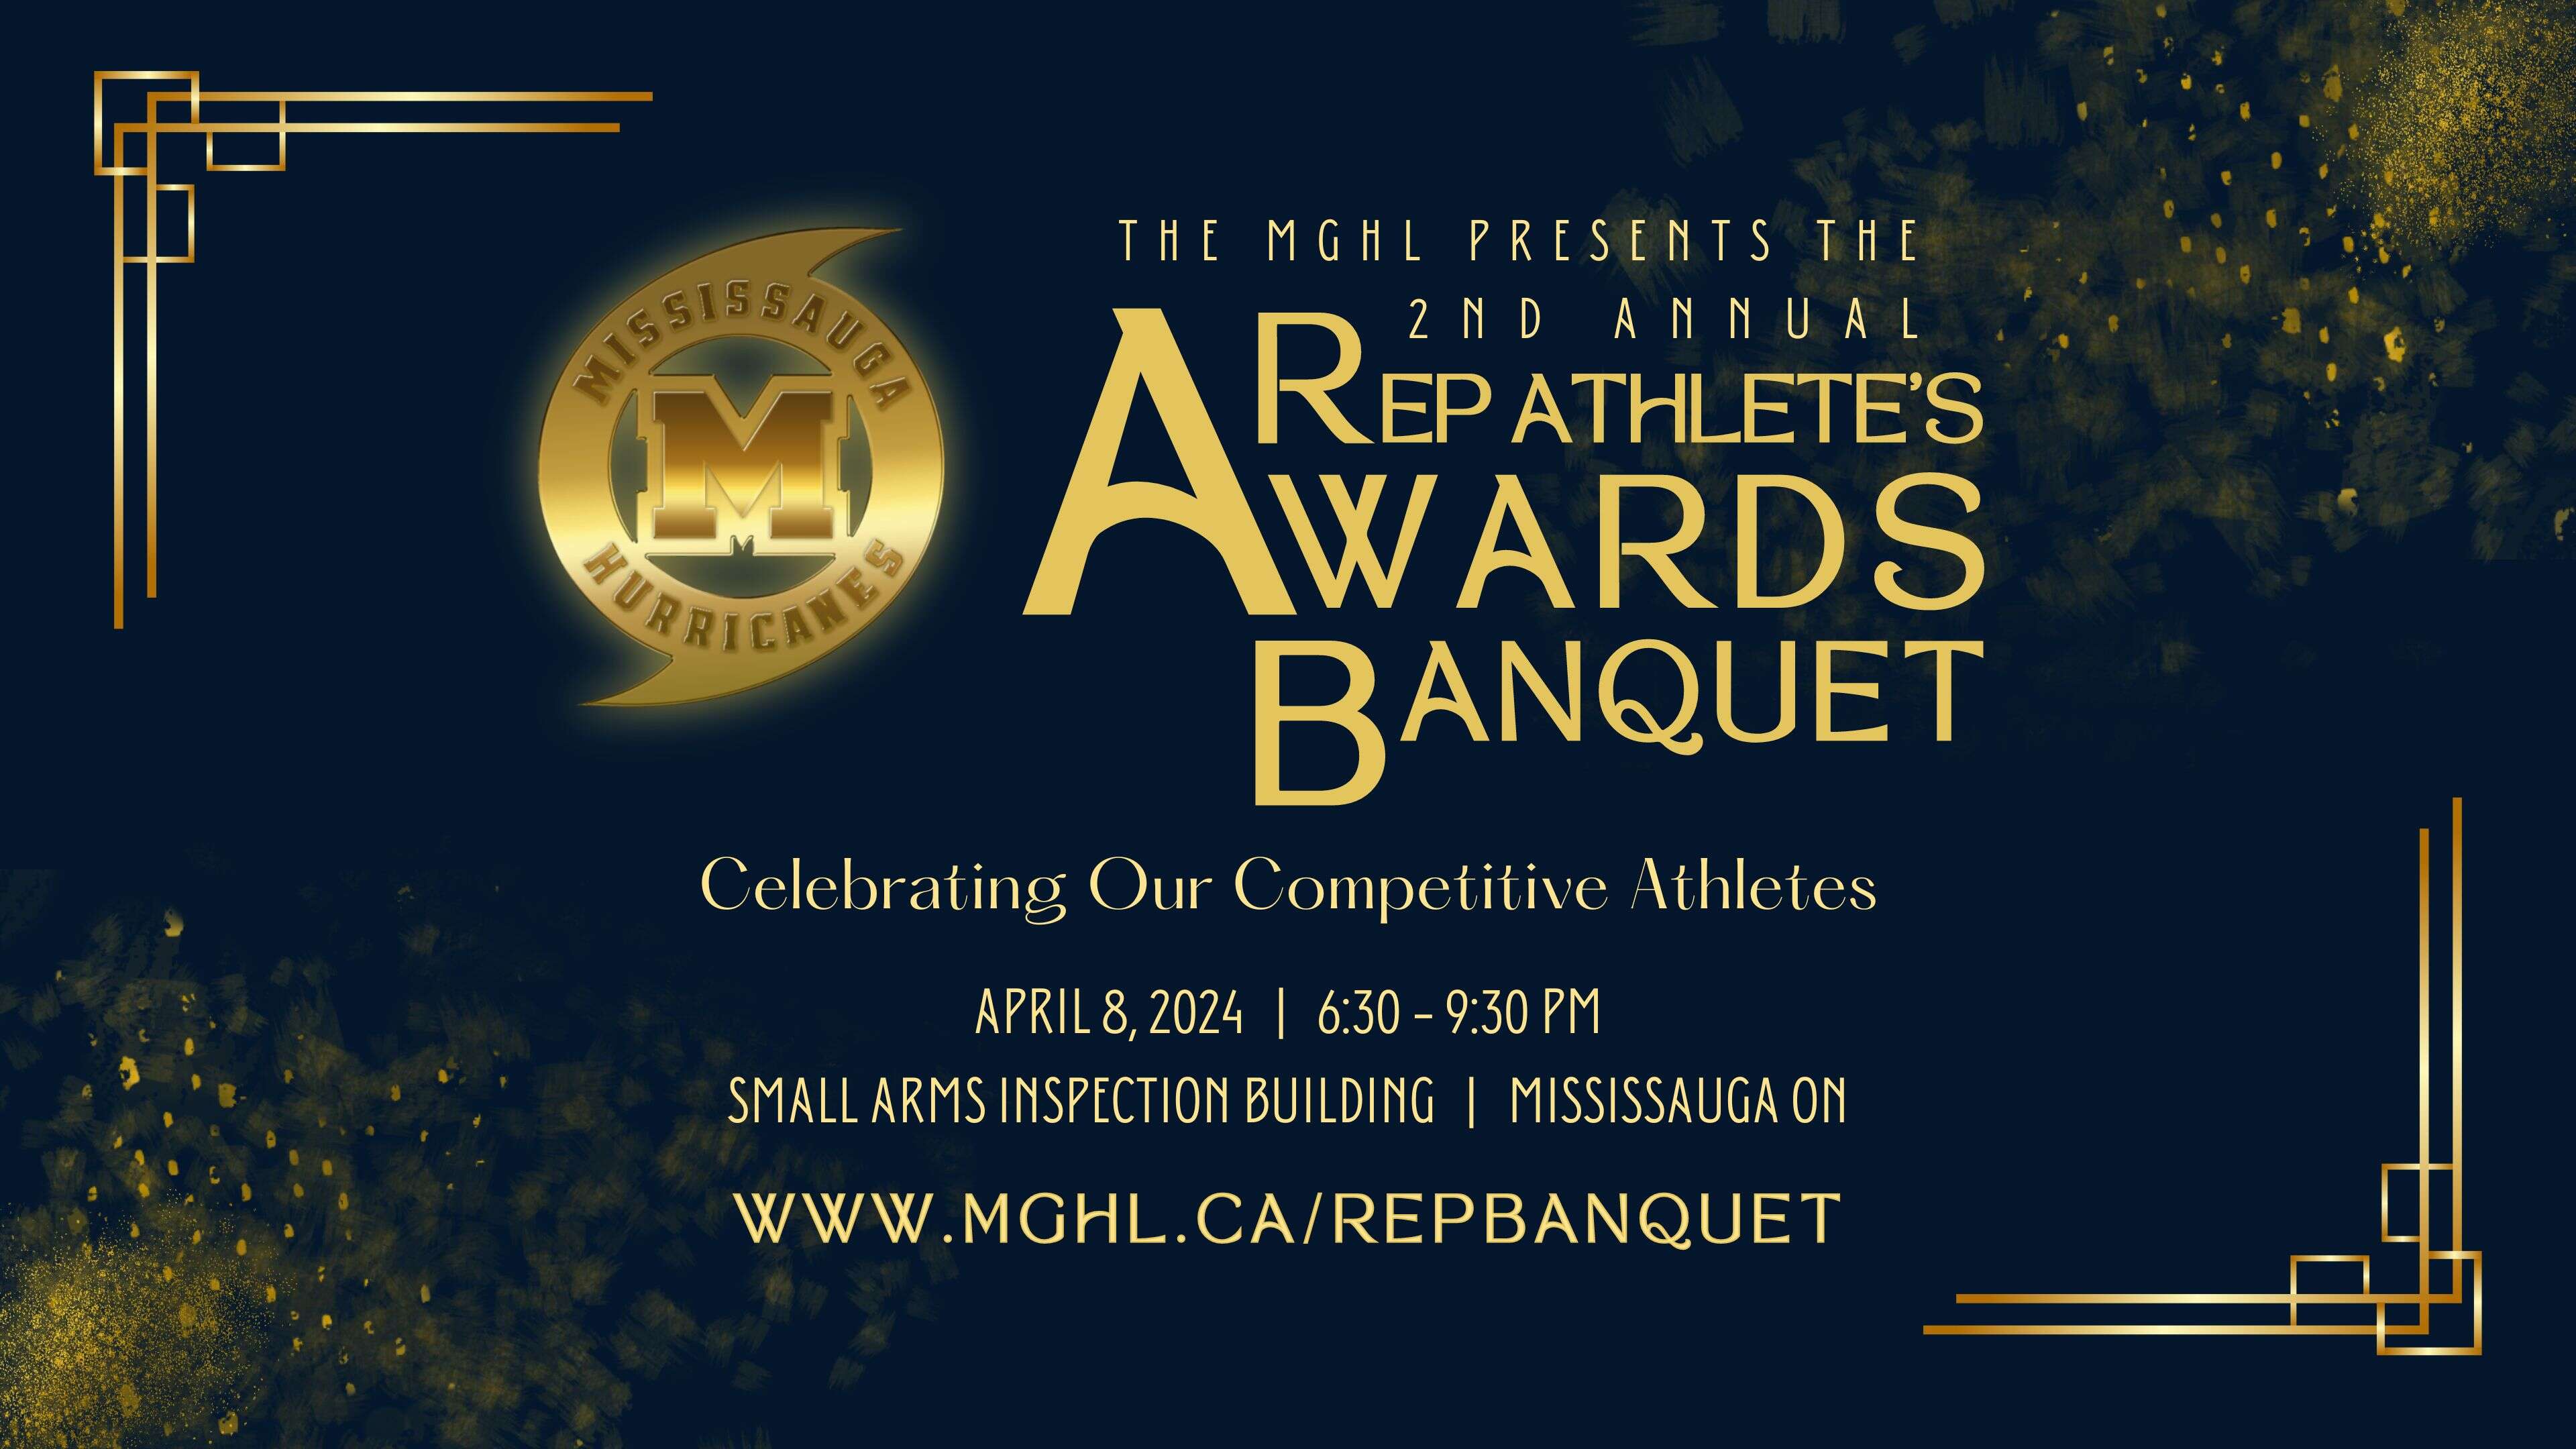 Rep_Athletes_Awards_Banquet_2024_Invitation.jpg